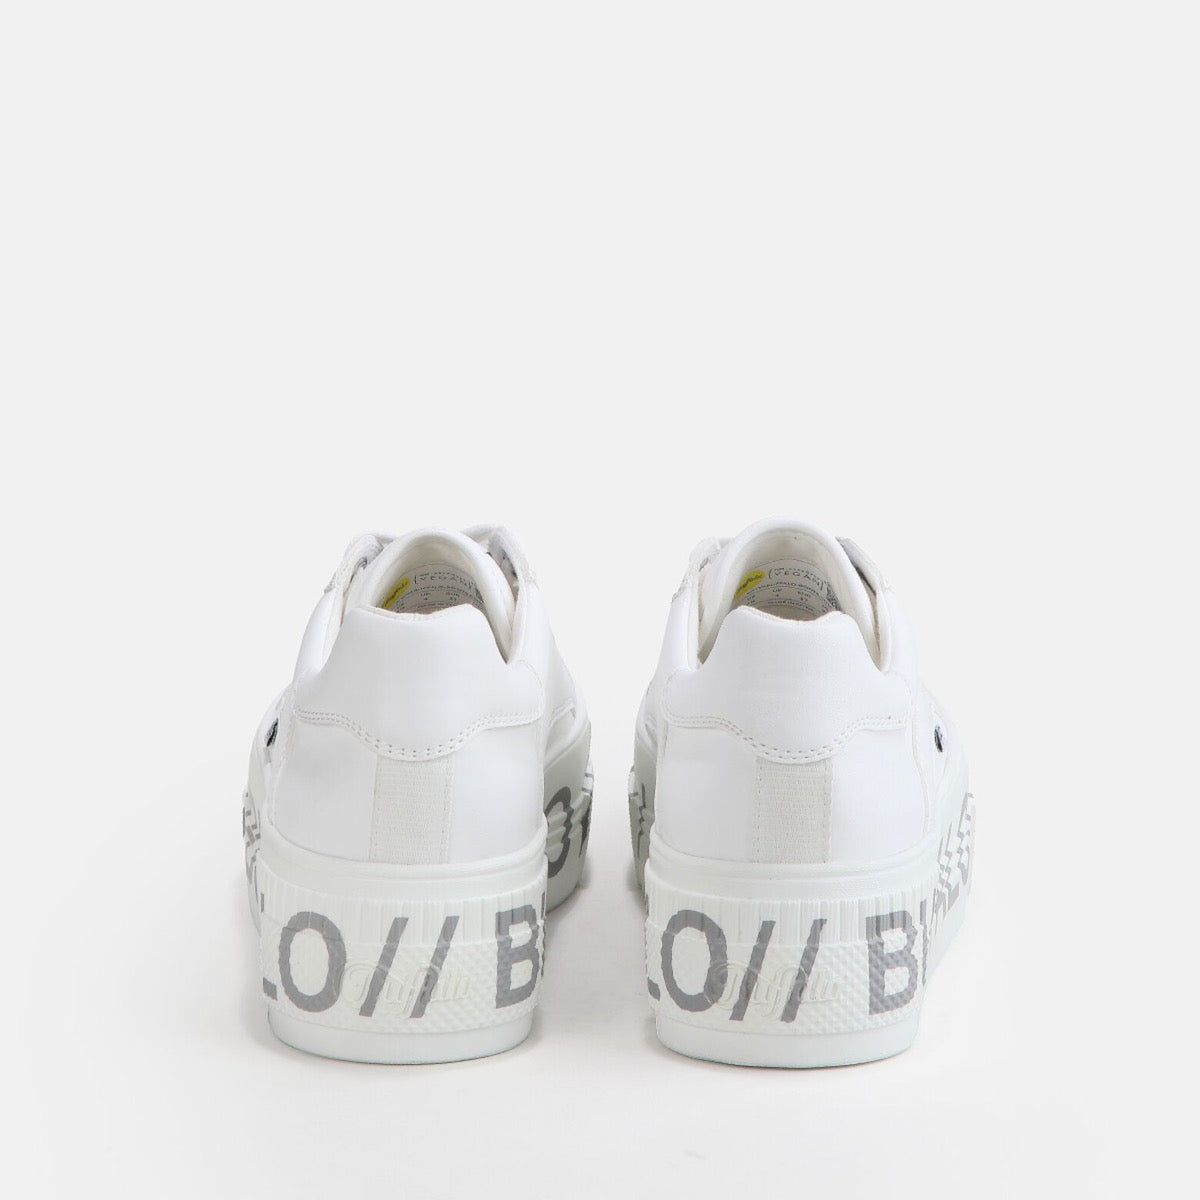 Scarpe BUFFALO Sneakers Vegan Platform linea Paired T1 colore Bianco